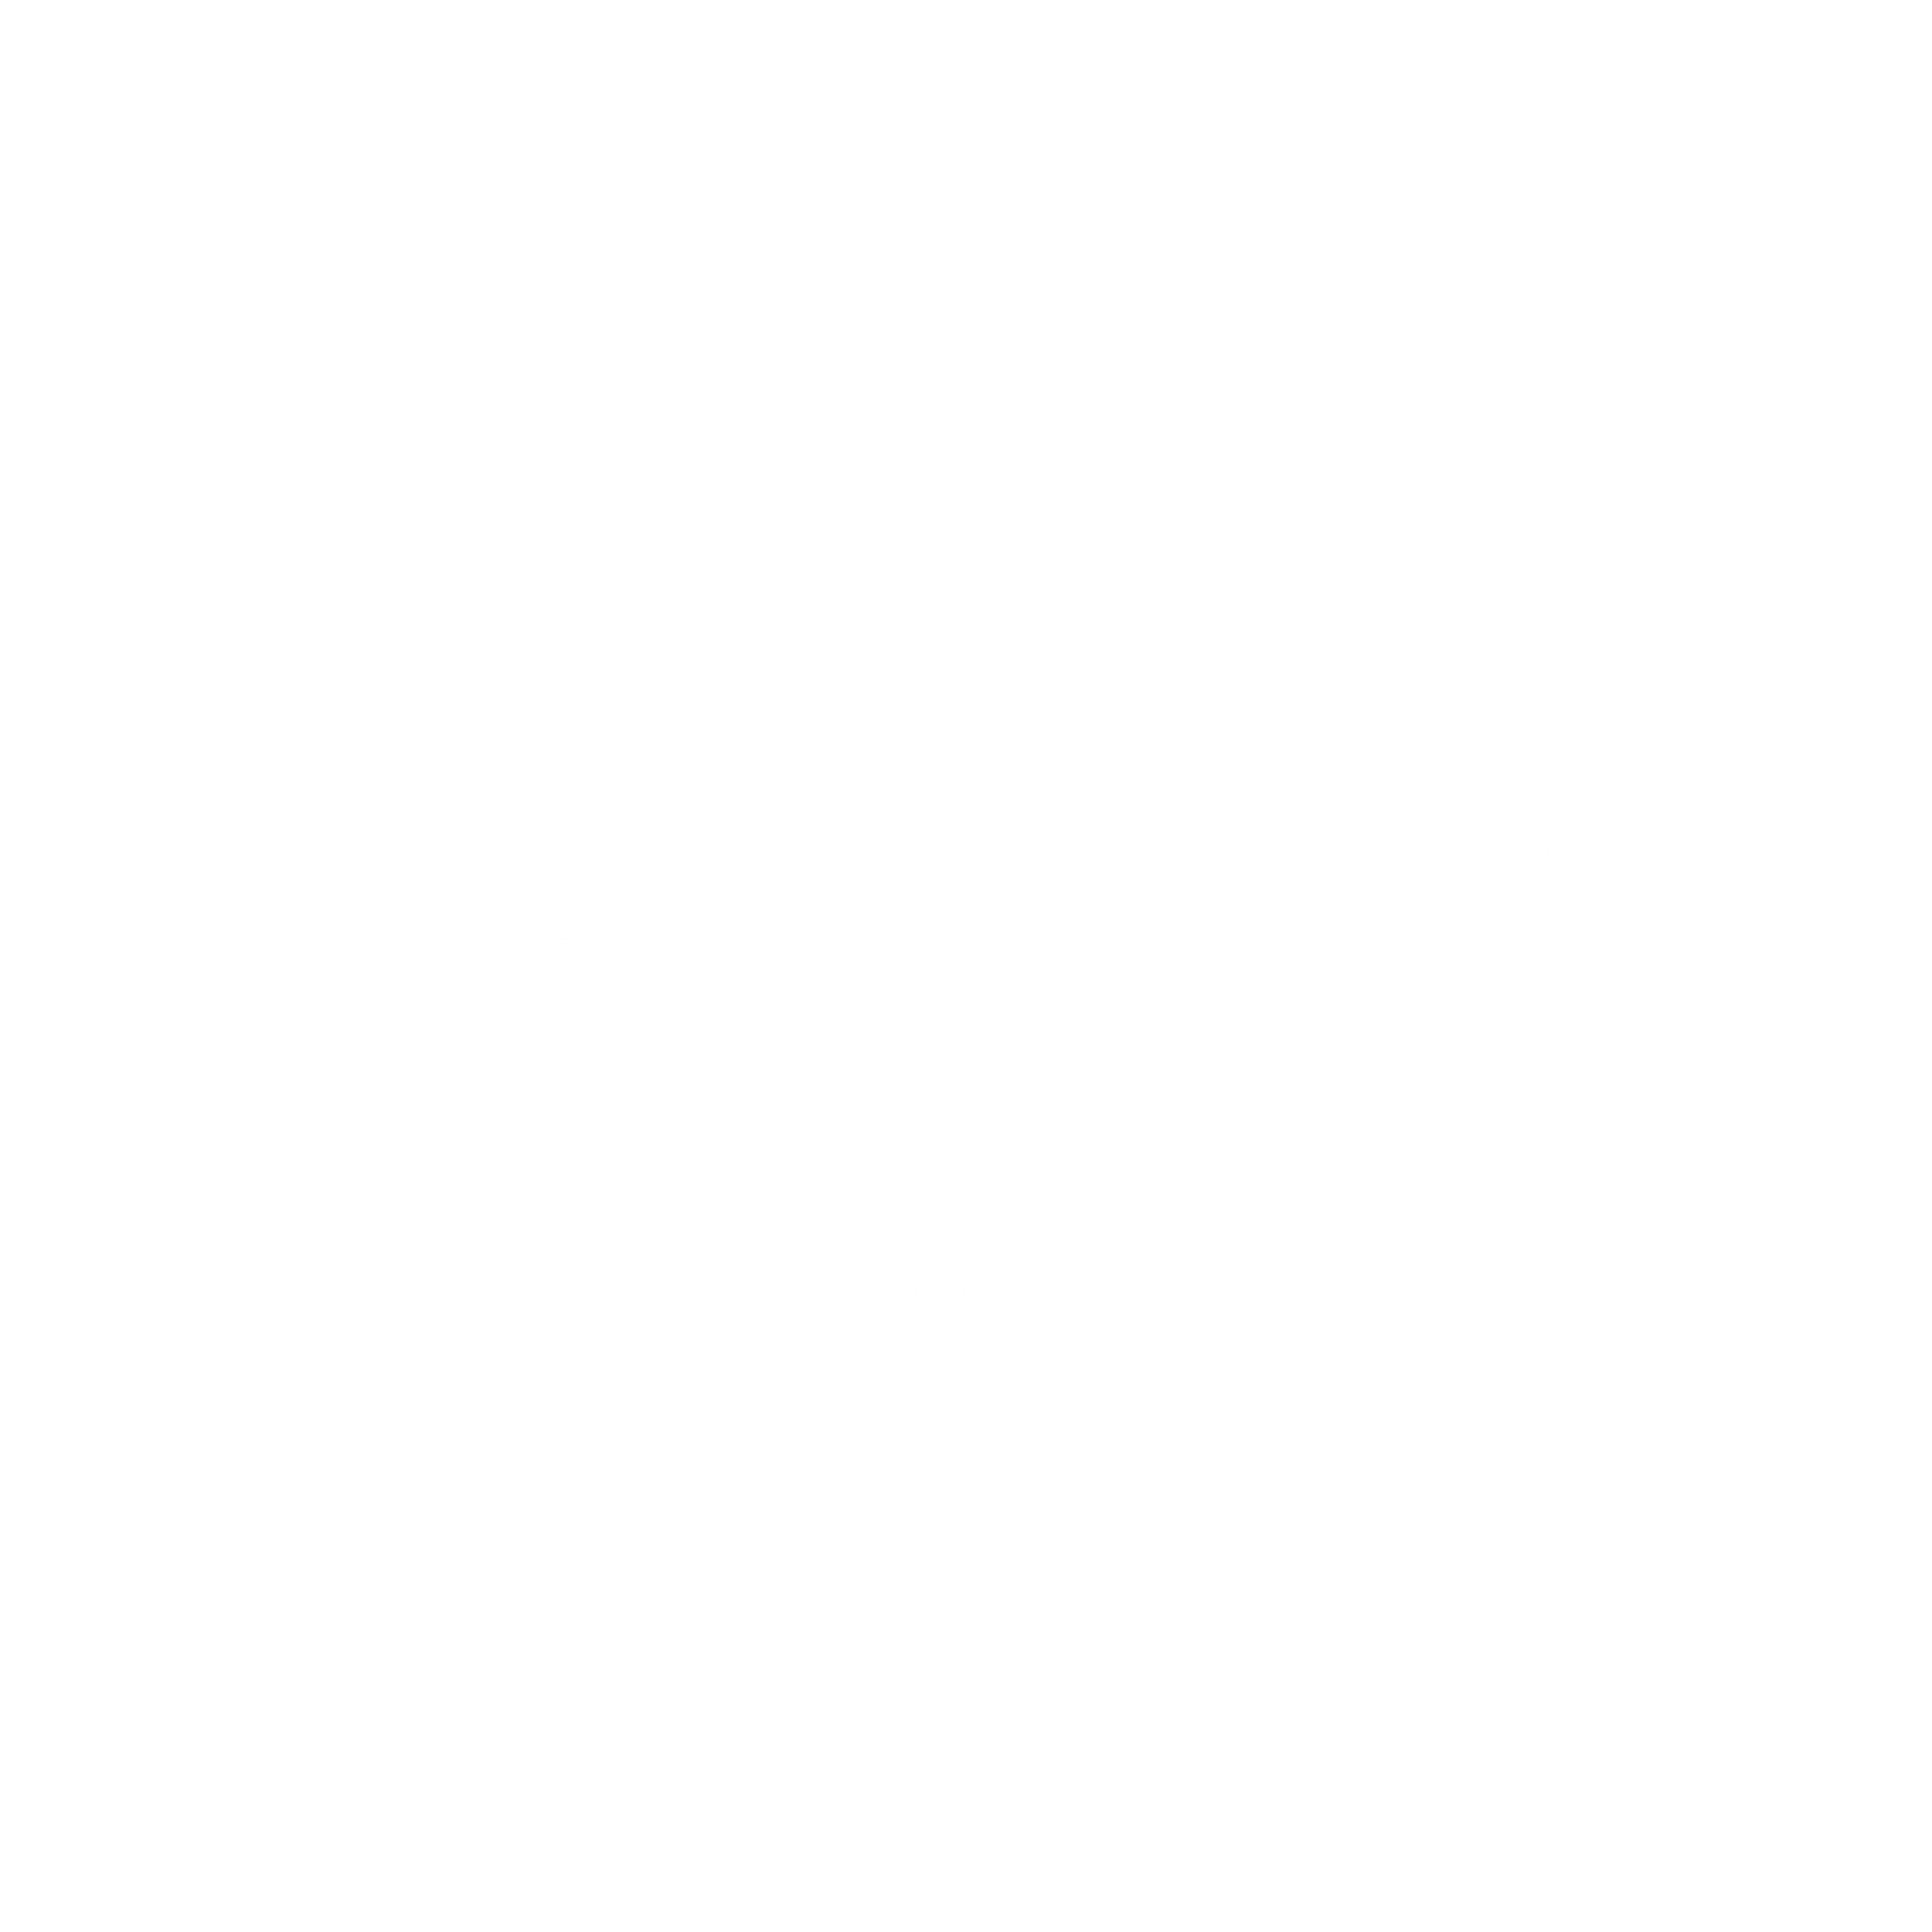 mayko